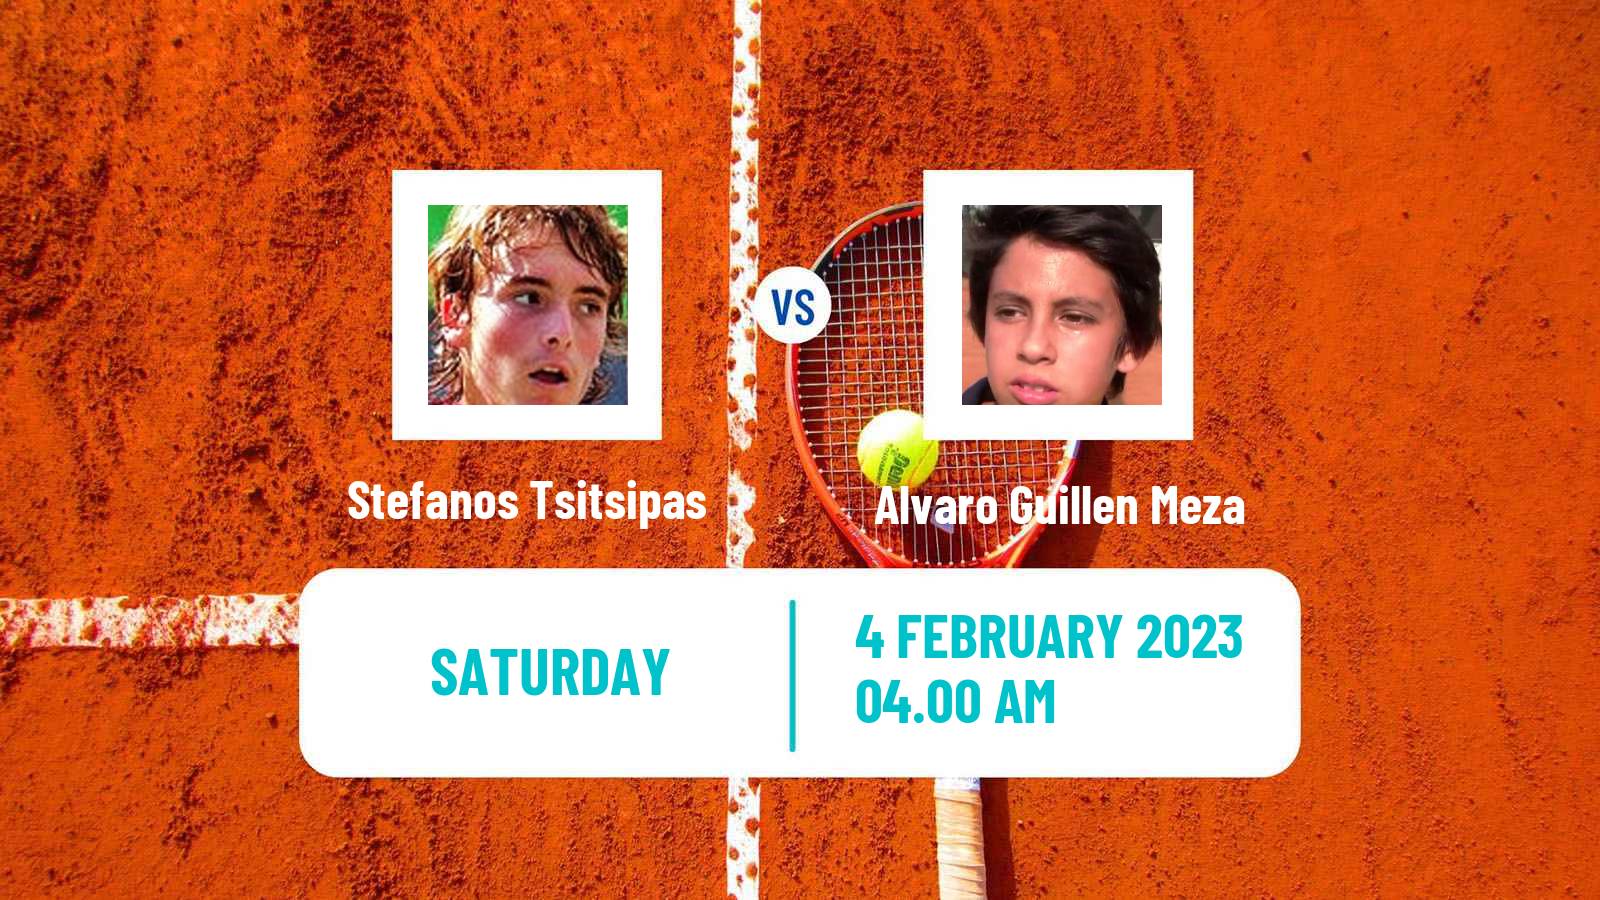 Tennis Davis Cup World Group I Stefanos Tsitsipas - Alvaro Guillen Meza